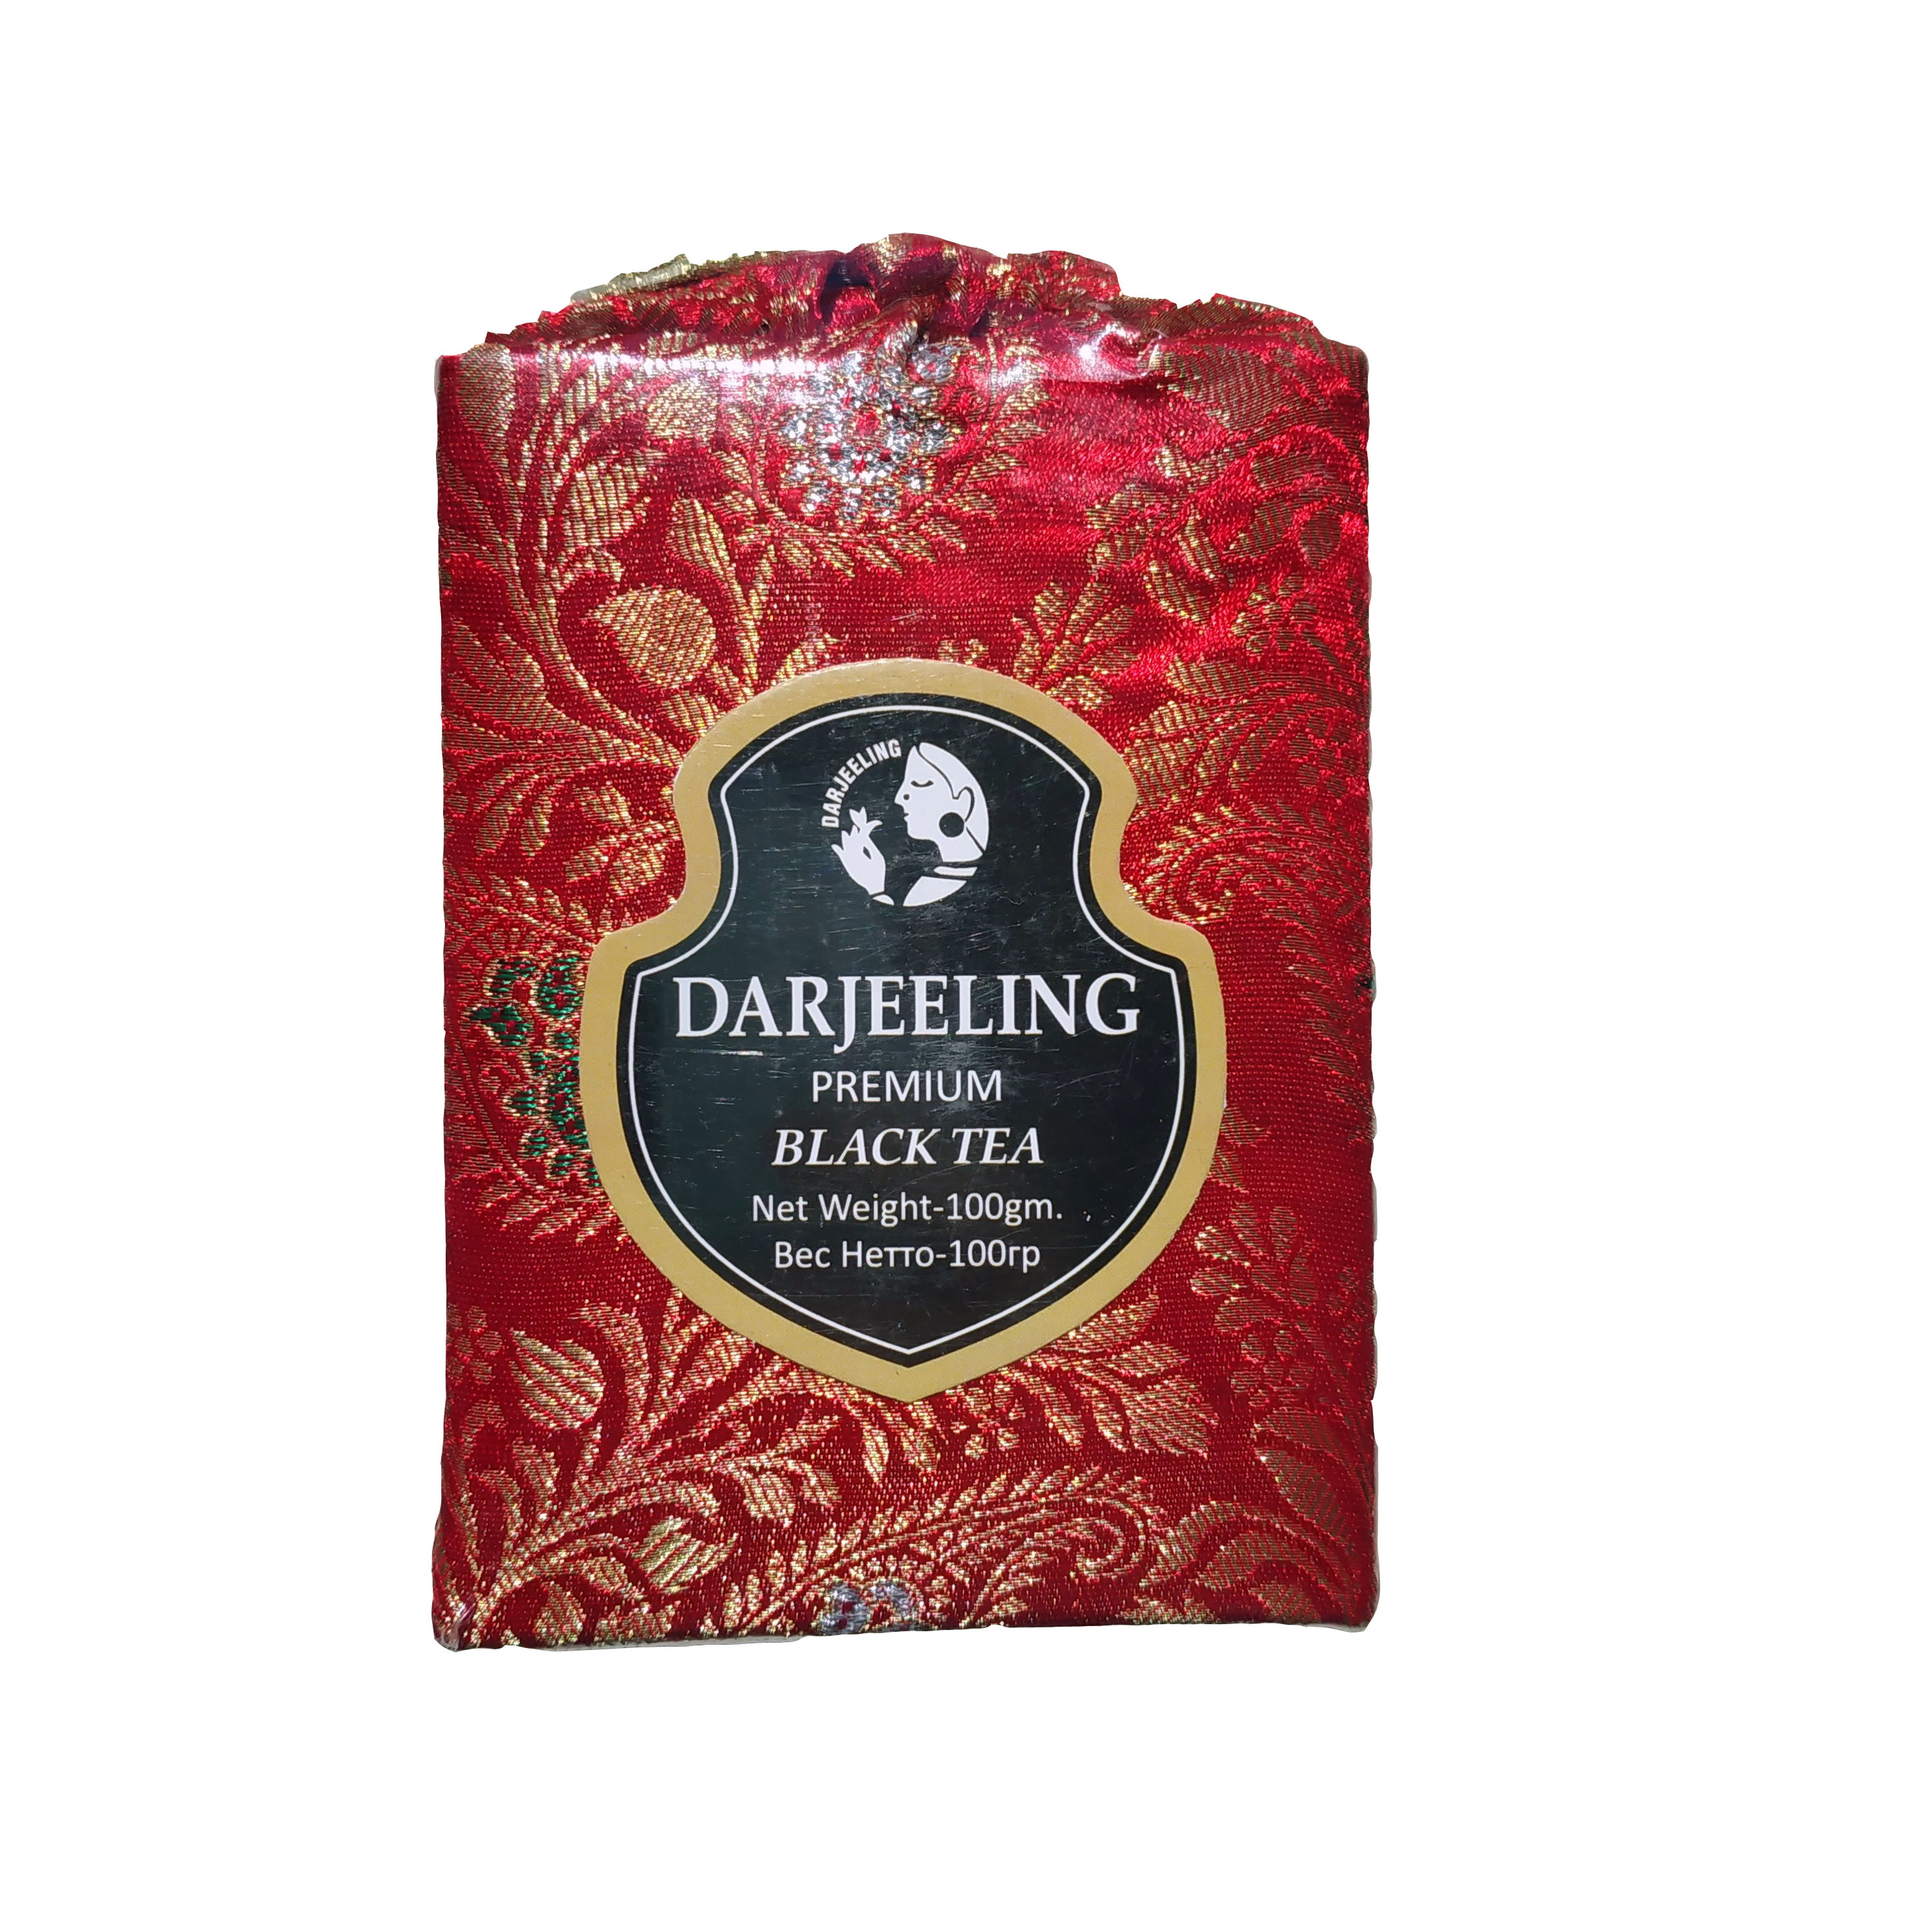 DARJEELING Black tea Bharat Bazaar (Дарджилинг чай Черный, в шелковом мешочке, Бхарат Базар), 100 г.